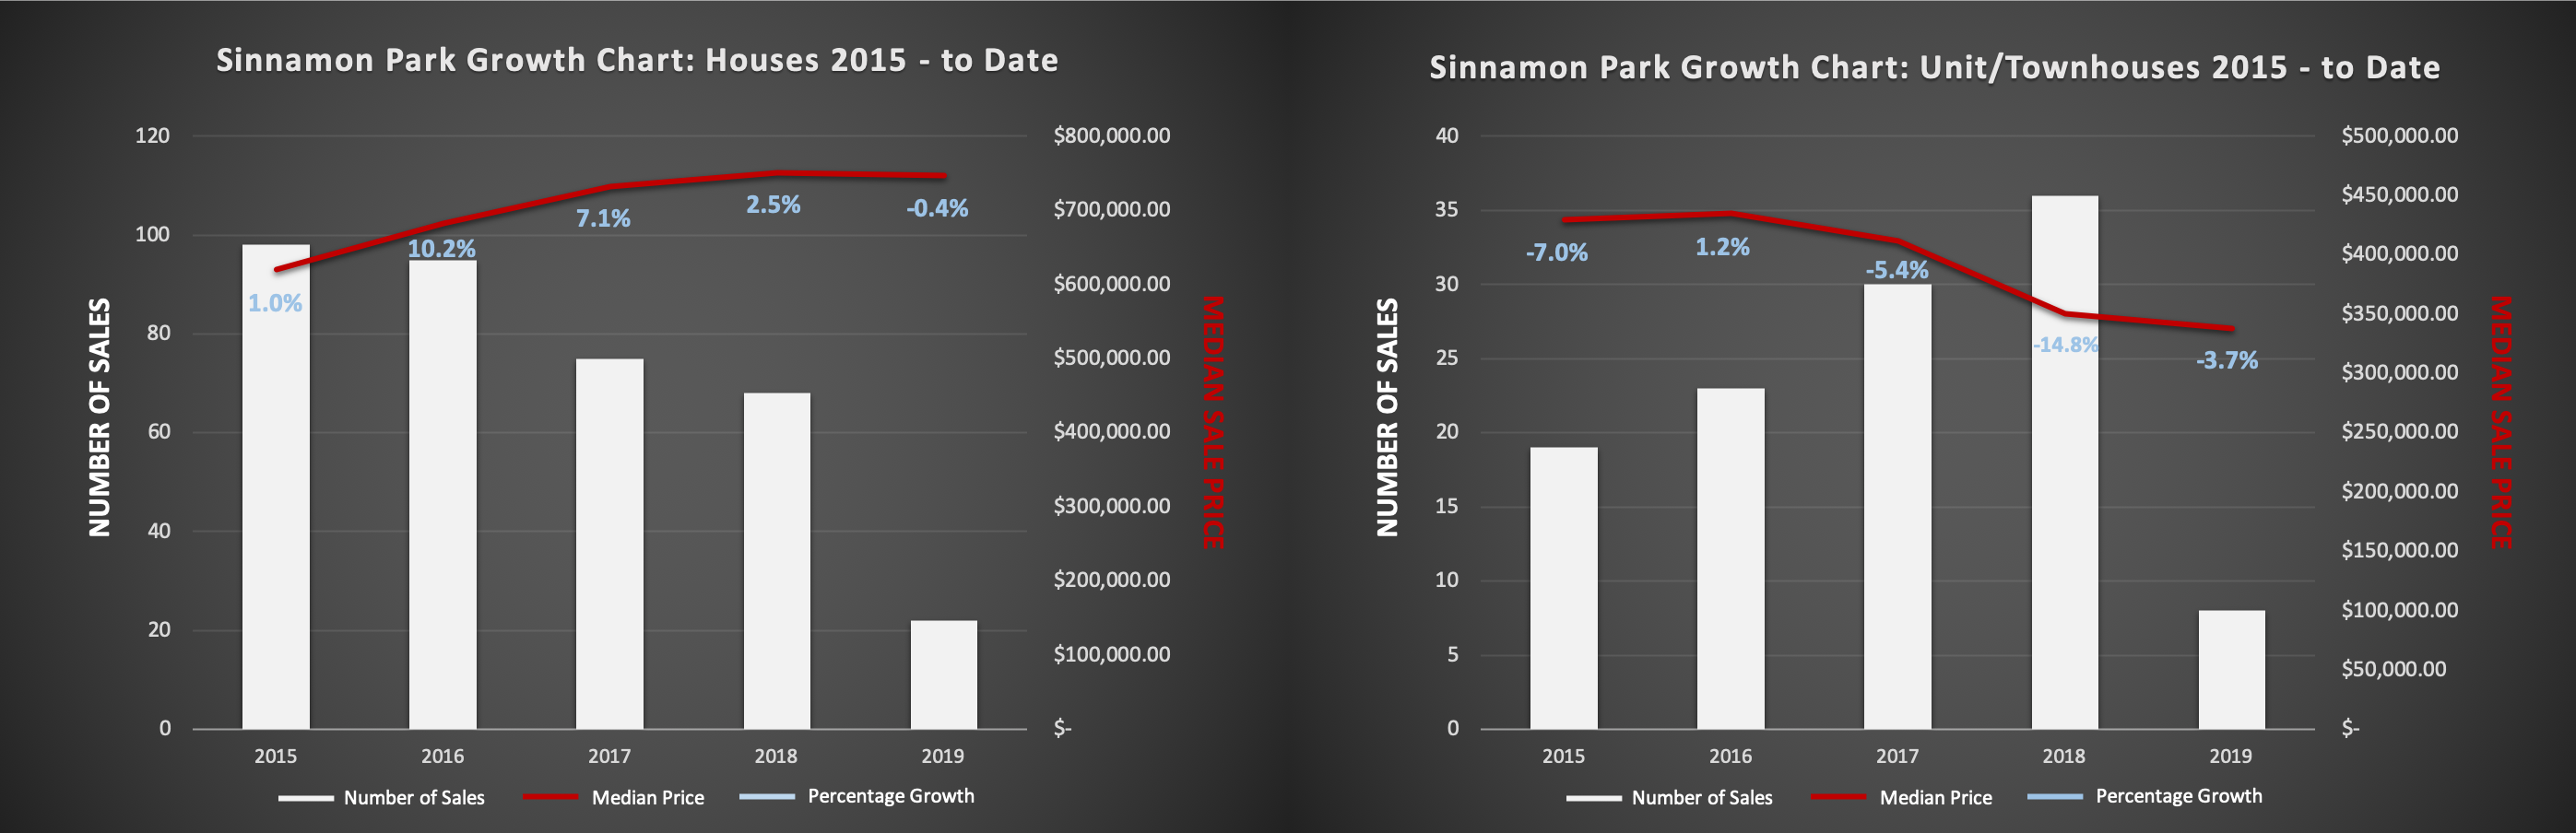 Sinnamon Park Financial Year Report 2018-2019